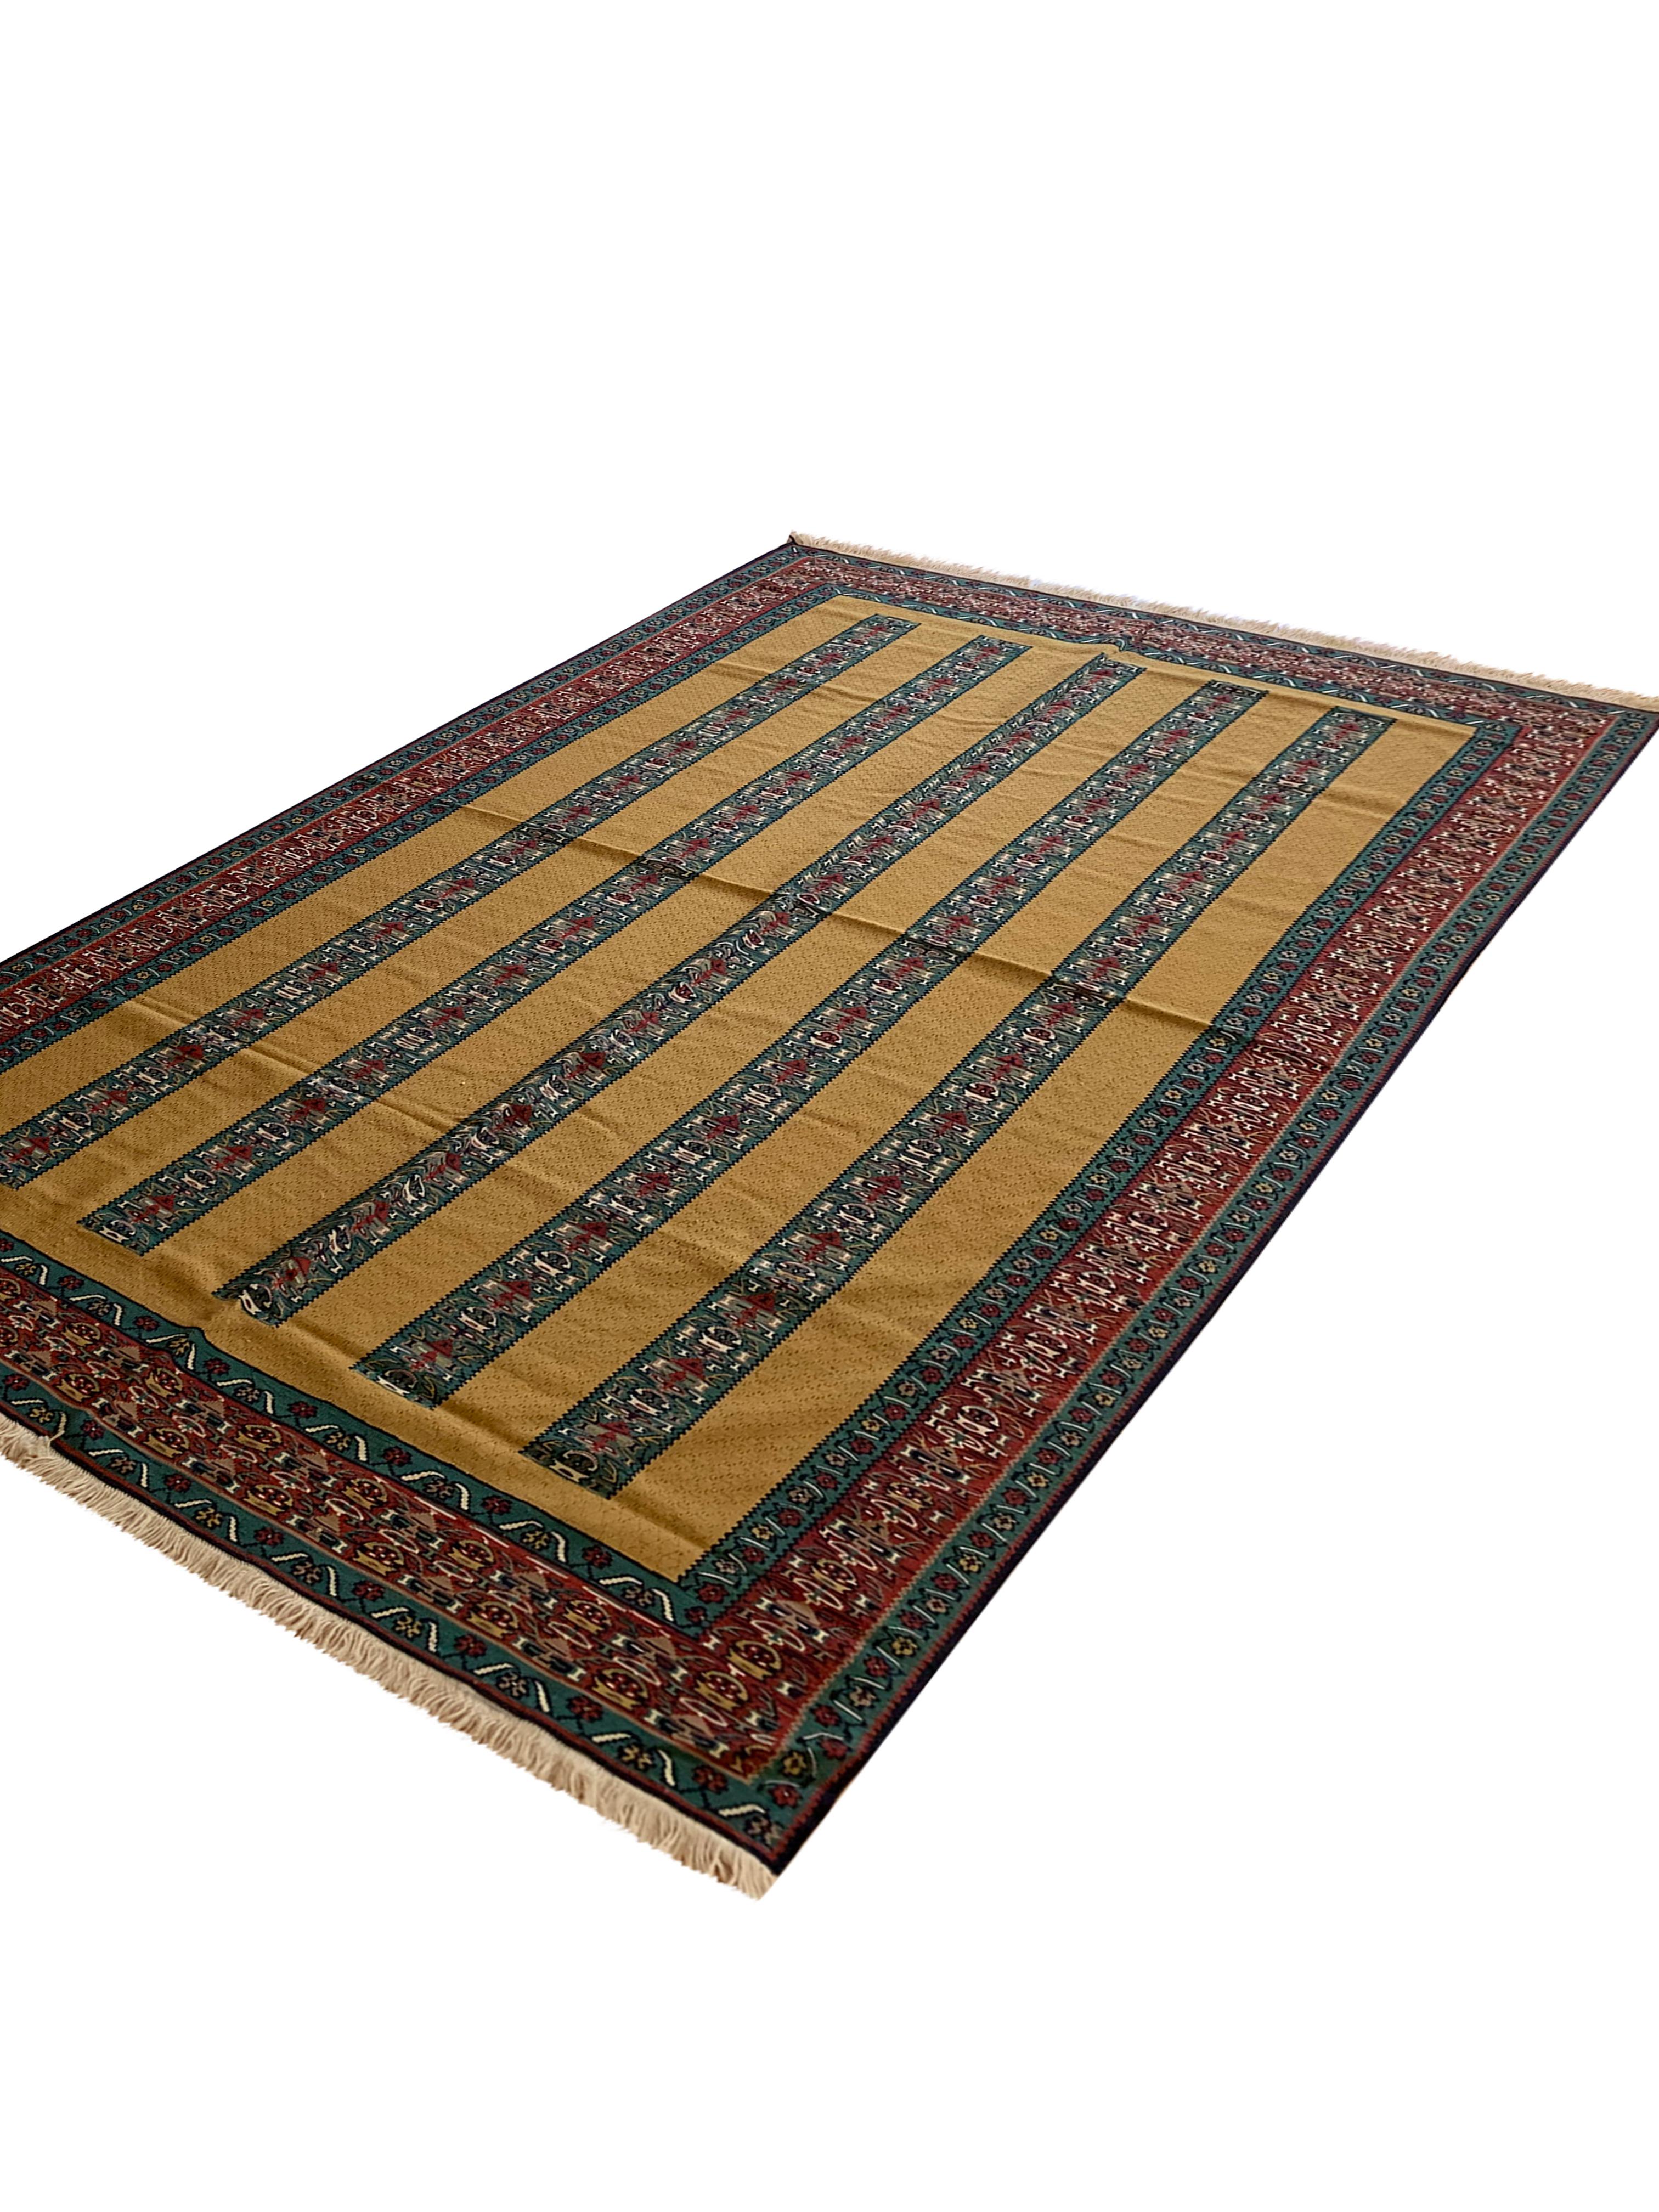 Iraqi Modern Striped Yellow Kilim Rug Handwoven Oriental Wool Carpet For Sale